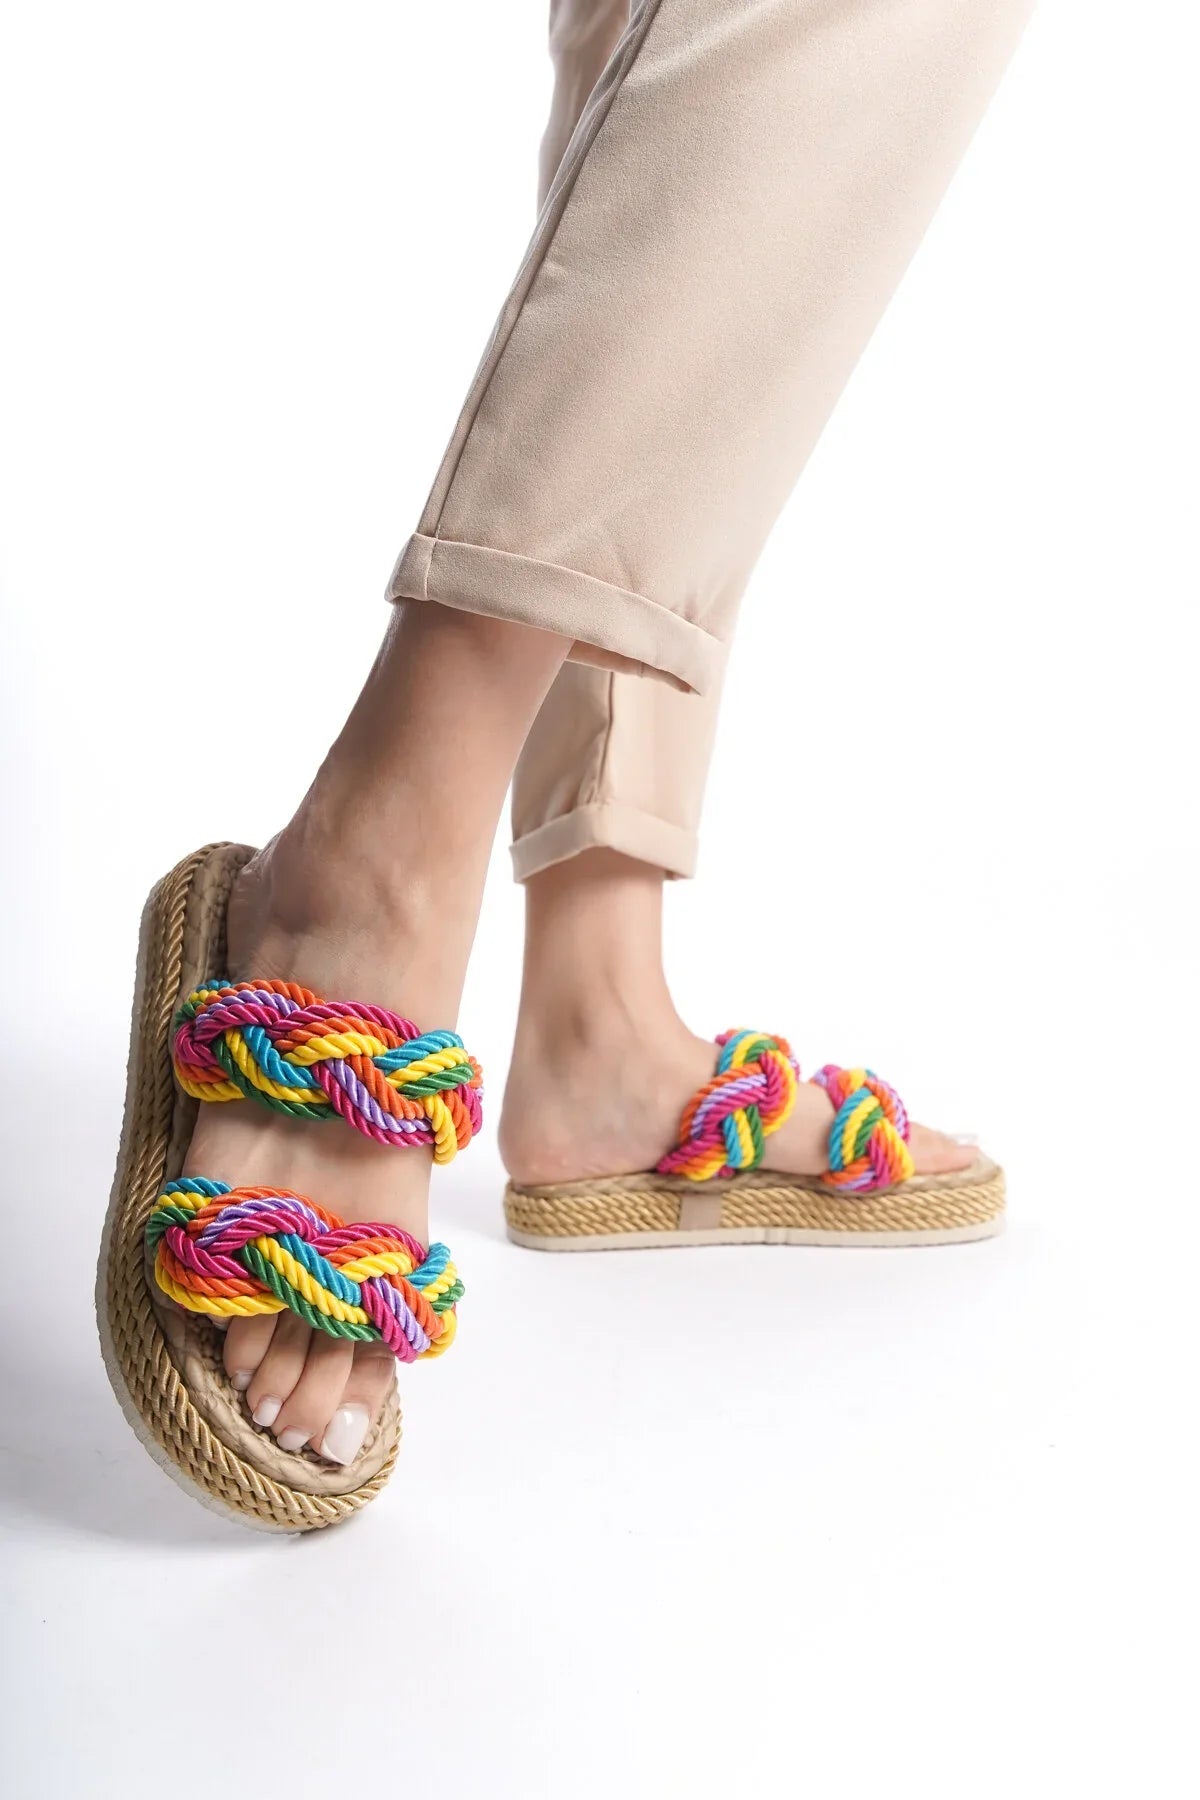 NexaNook Women's Rope Drawstring High Sole Straw Slippers